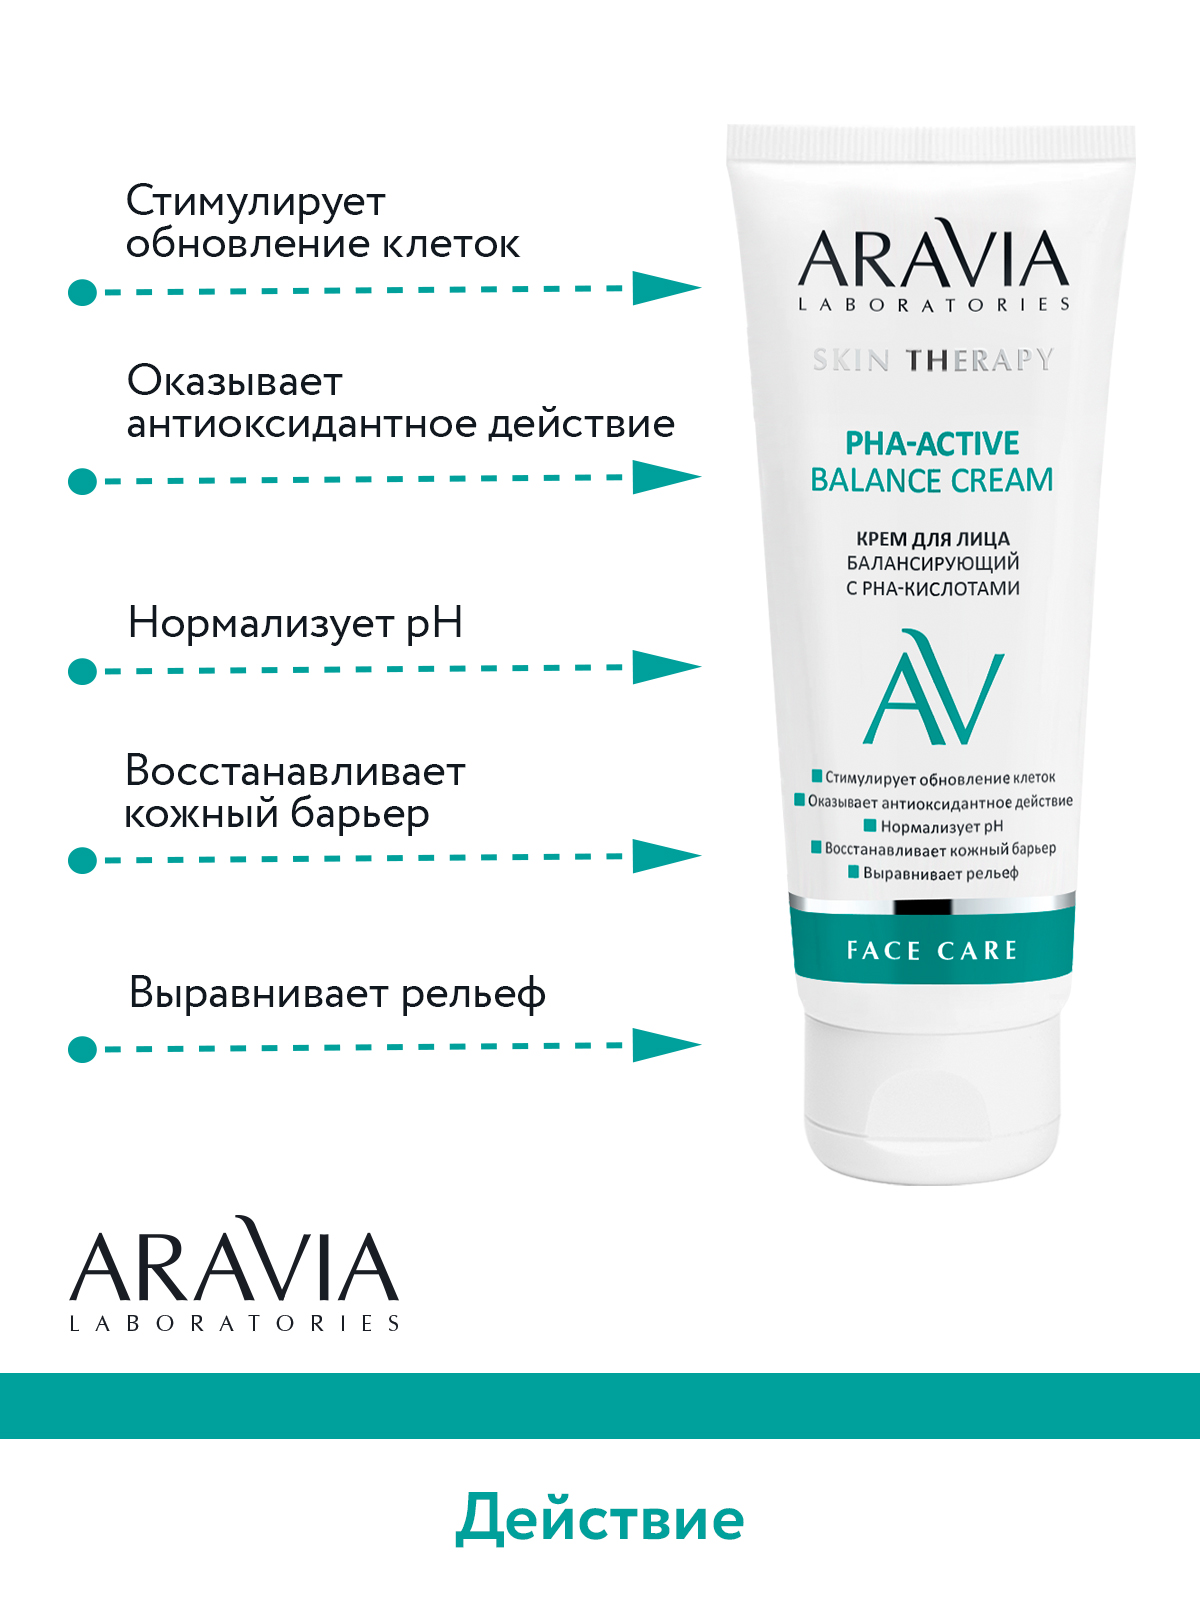 Крем для лица ARAVIA Laboratories балансирующий с РНА-кислотами PHA-Active Balance Cream 50 мл - фото 5